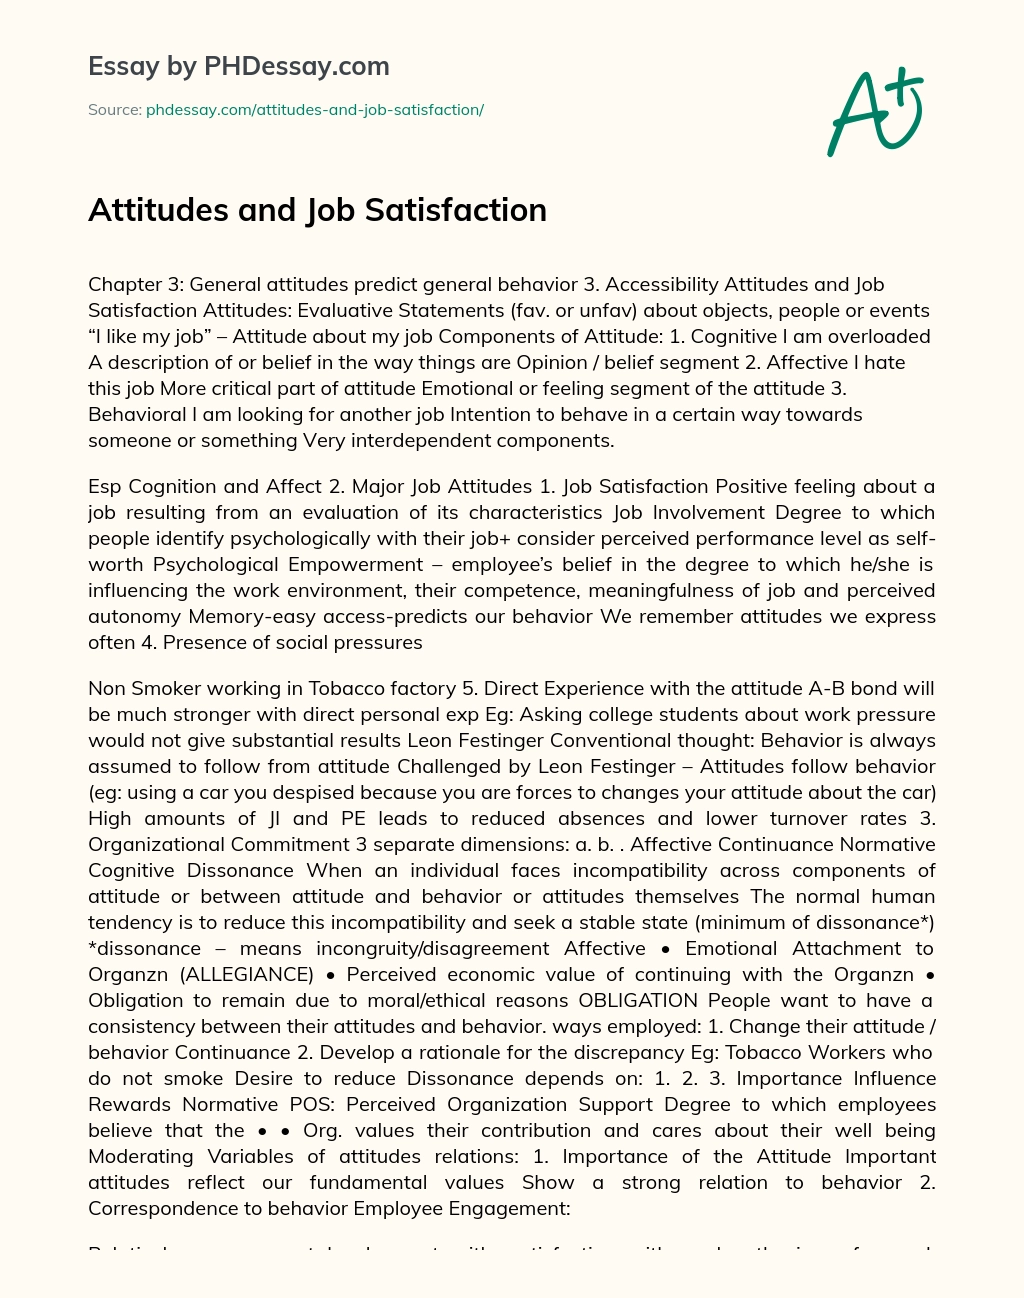 Attitudes and Job Satisfaction essay